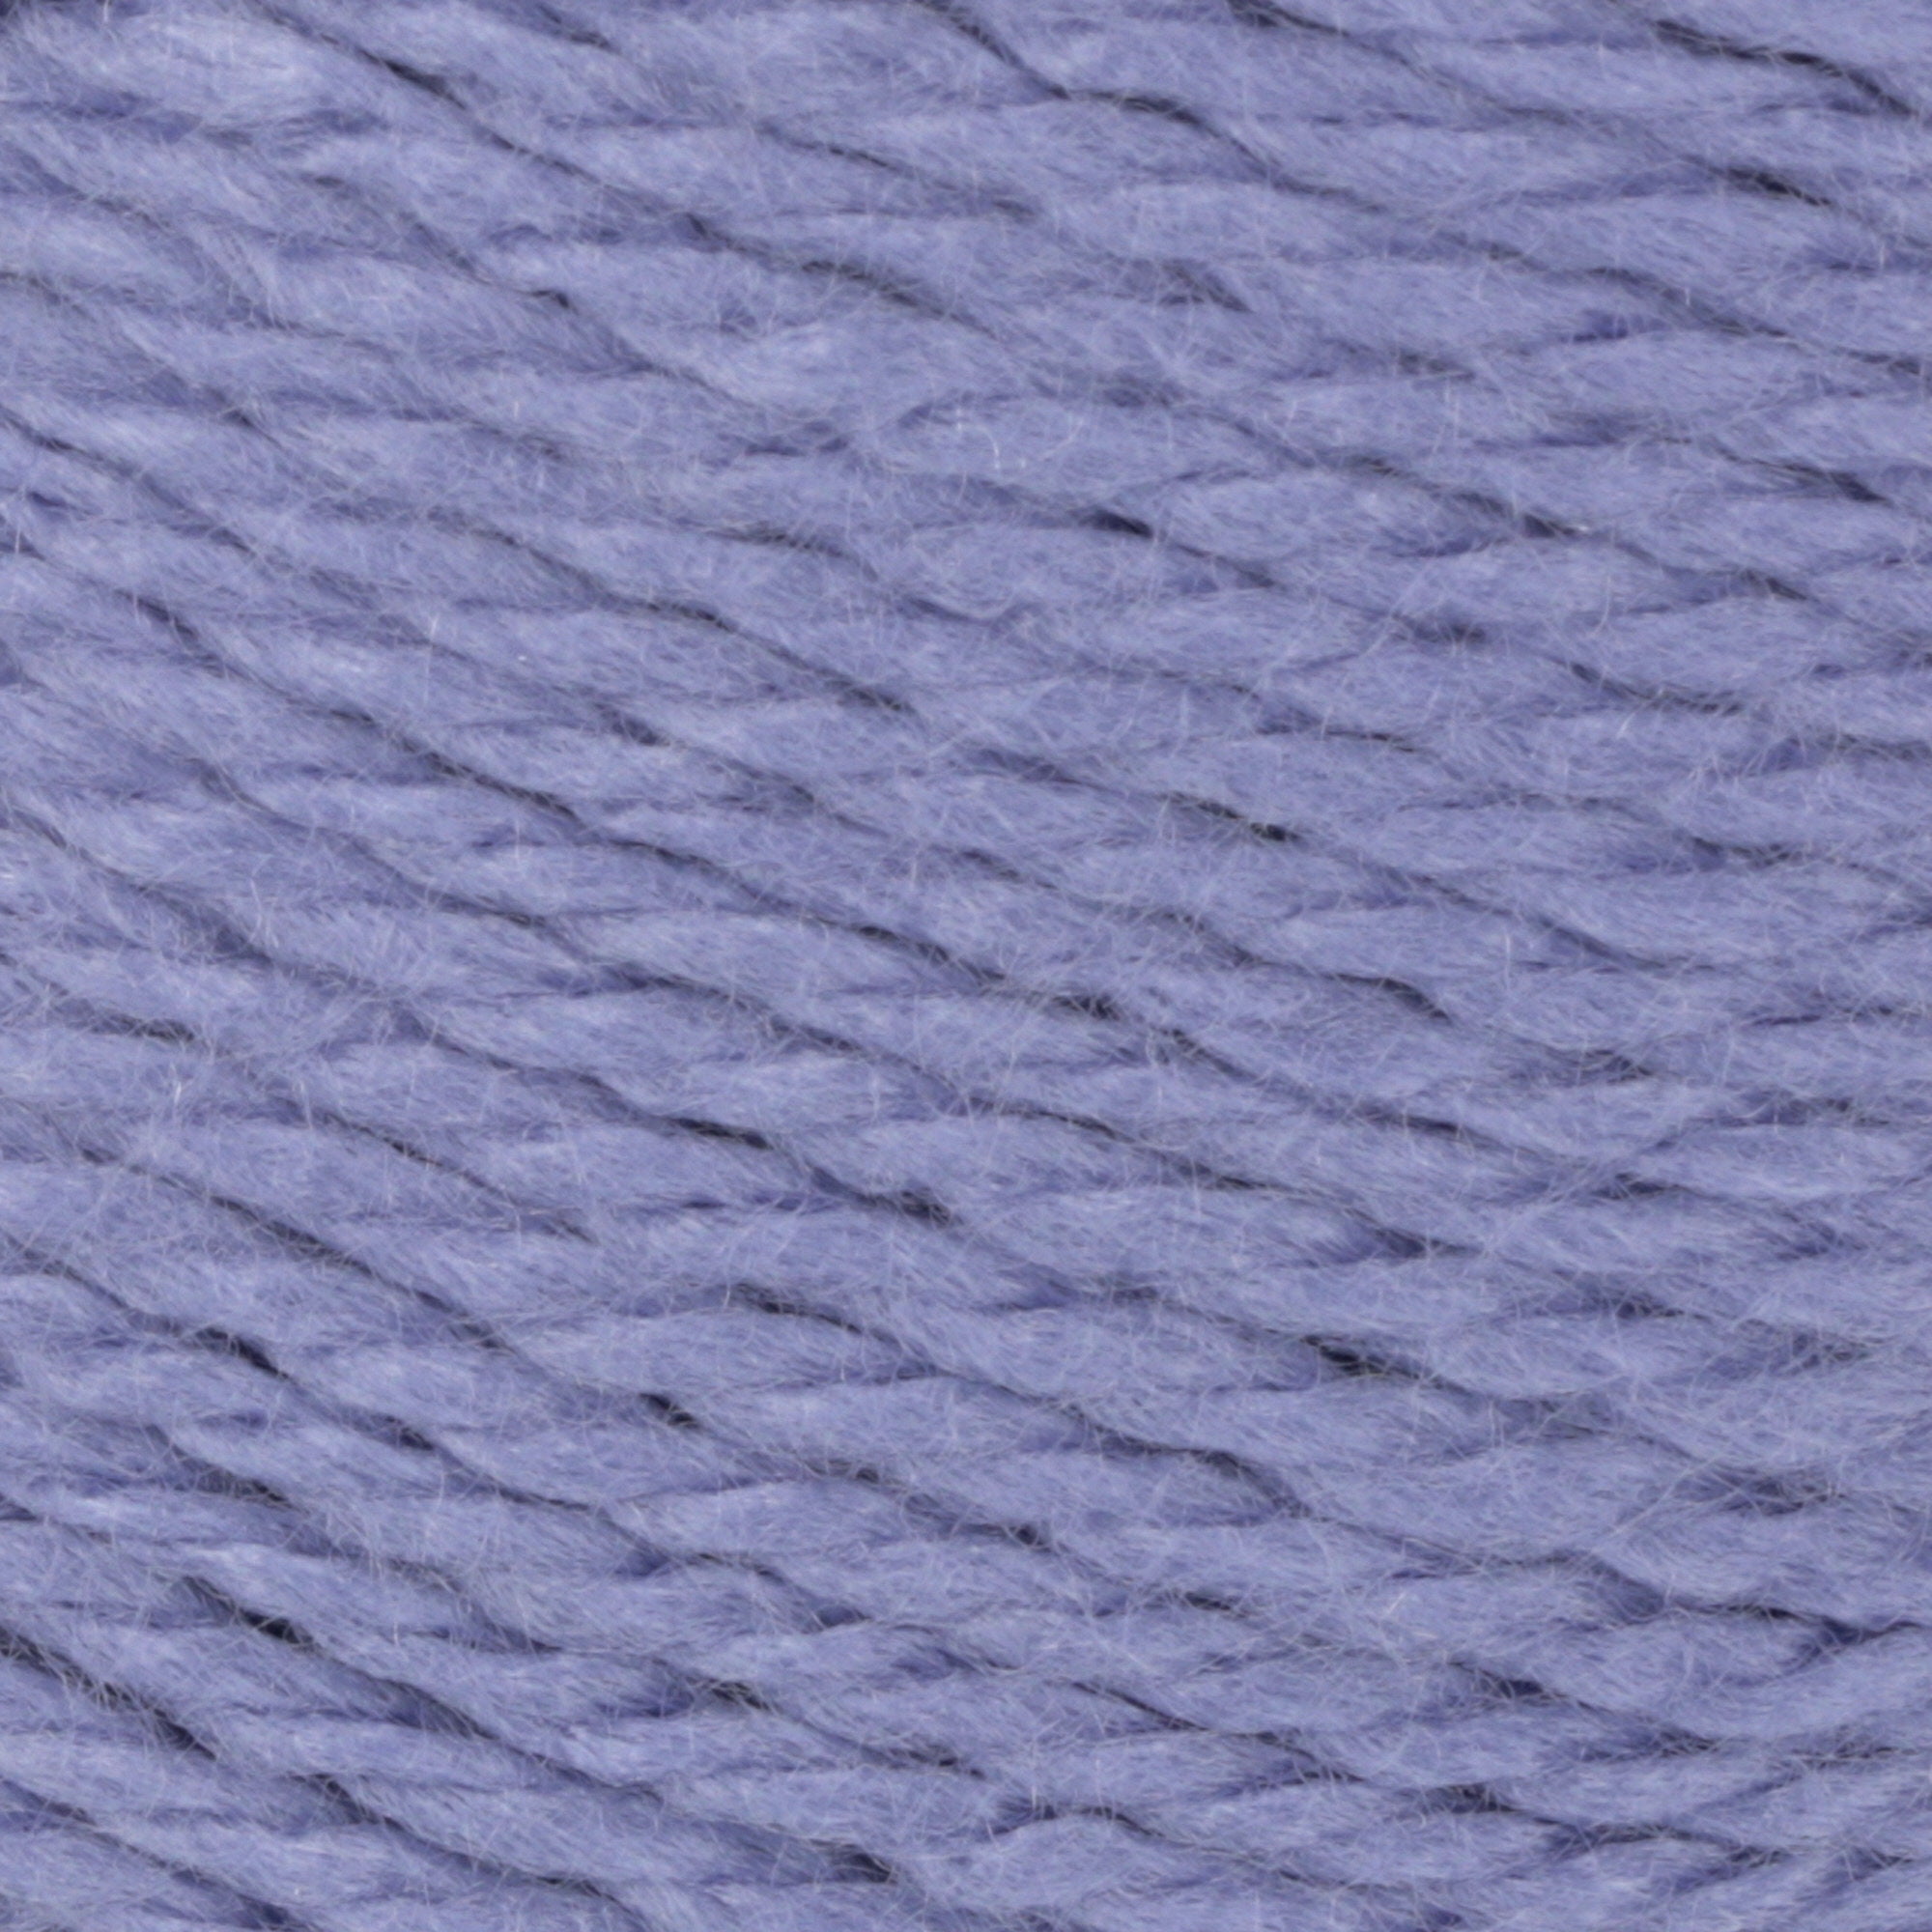 Bernat Softee Baby Pale Blue Yarn 3 Pack Of 141g/5oz Acrylic 3 Dk (light) -  362 Yards Knitting/crochet : Target